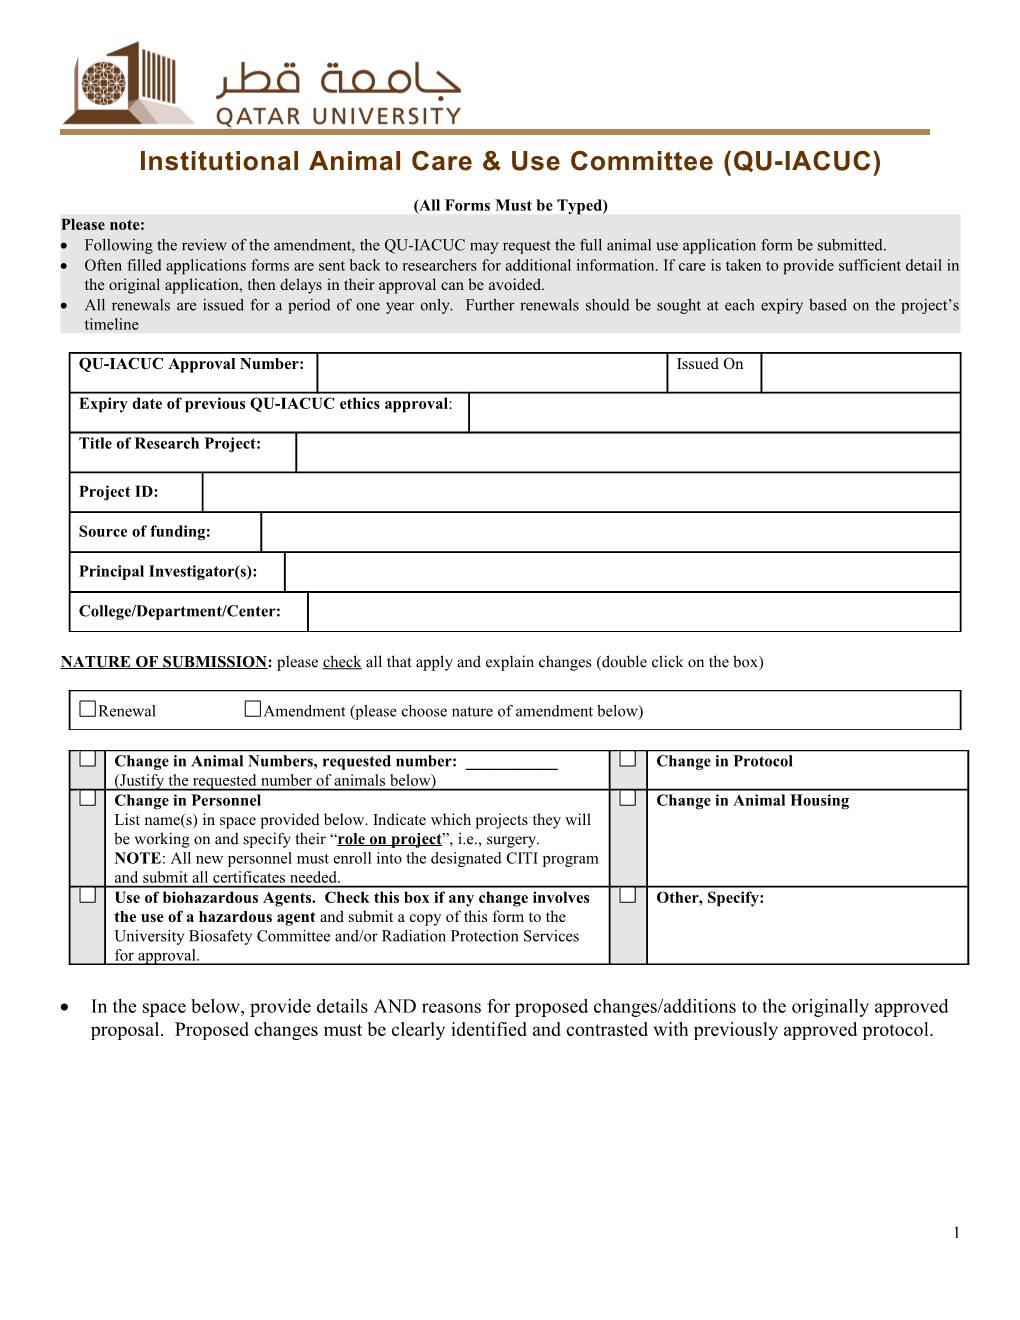 Form 2 (6/98) Animal Use Protocol Minor Amendment Form